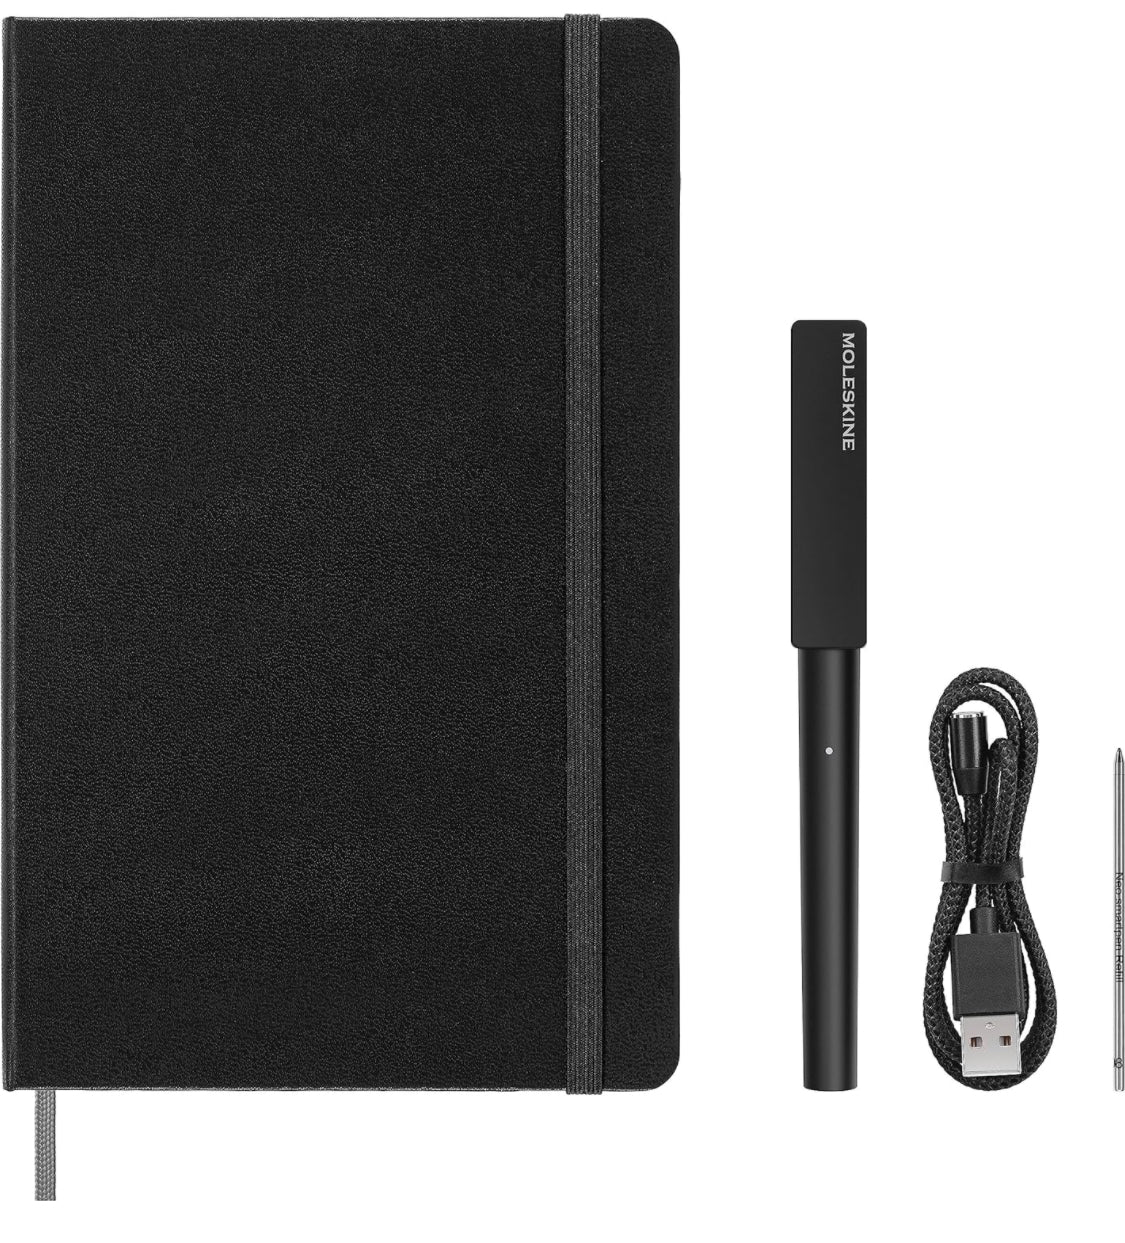 Moleskine Smart Notebook 📒 review